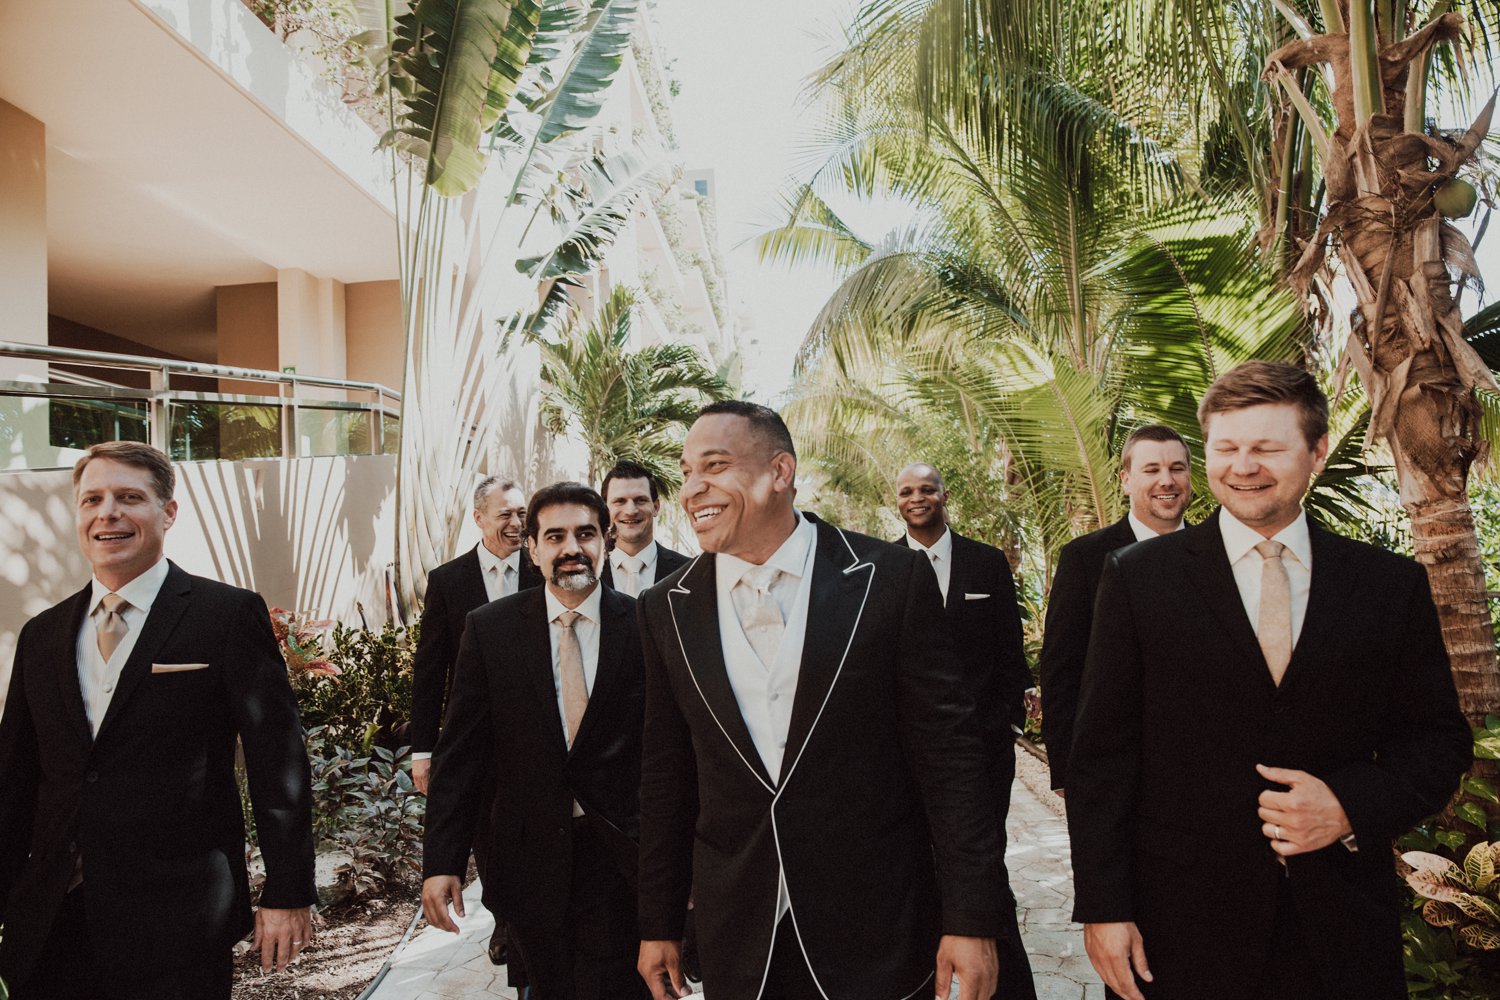  images by feliciathephotographer.com | destination wedding photographer | el dorado riviera maya | glamorous | beachside | resort | groomsmen | candid | the black tux | gold ties | palm trees | tropical | 